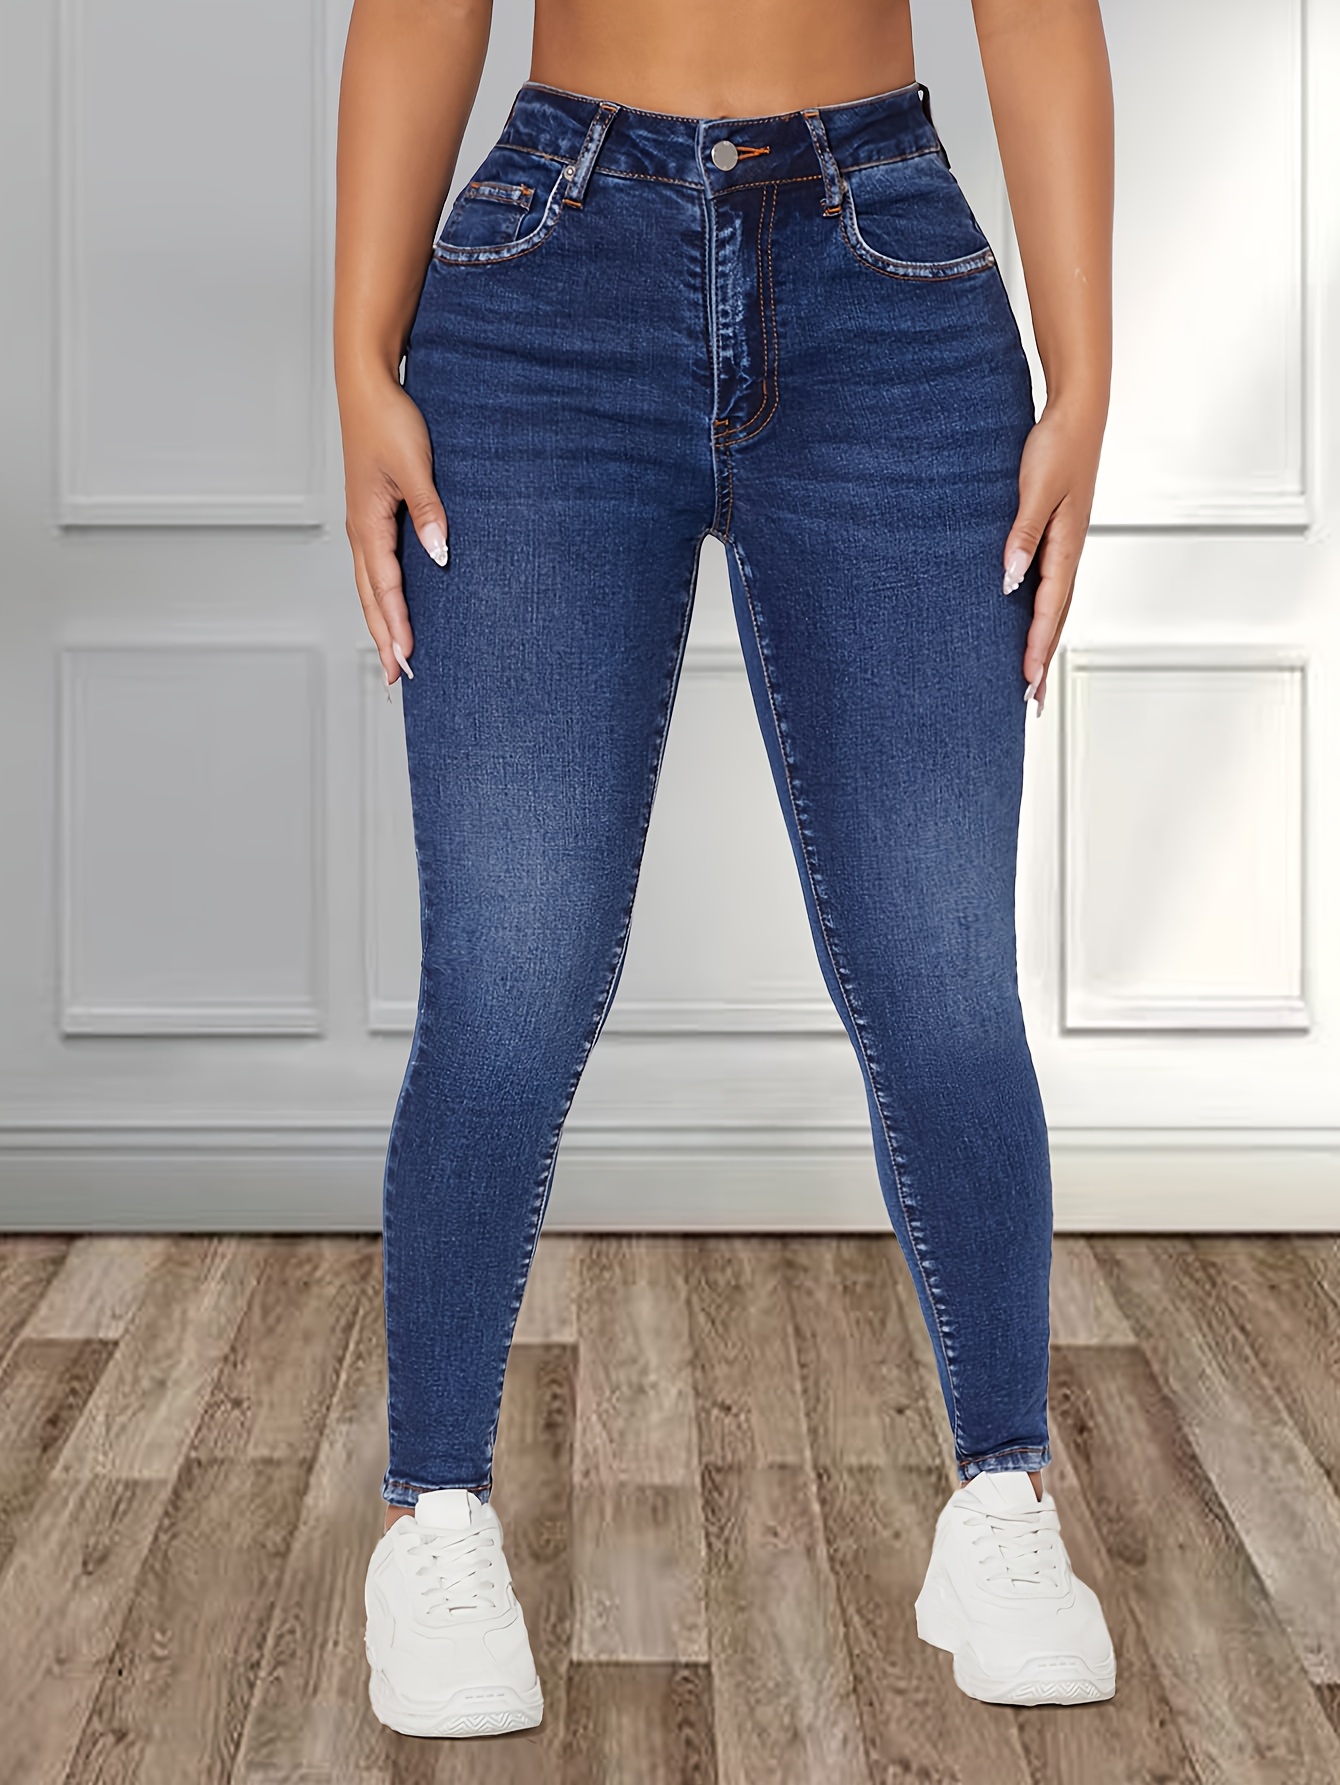 Petite Pants for Women - Petite Jeans